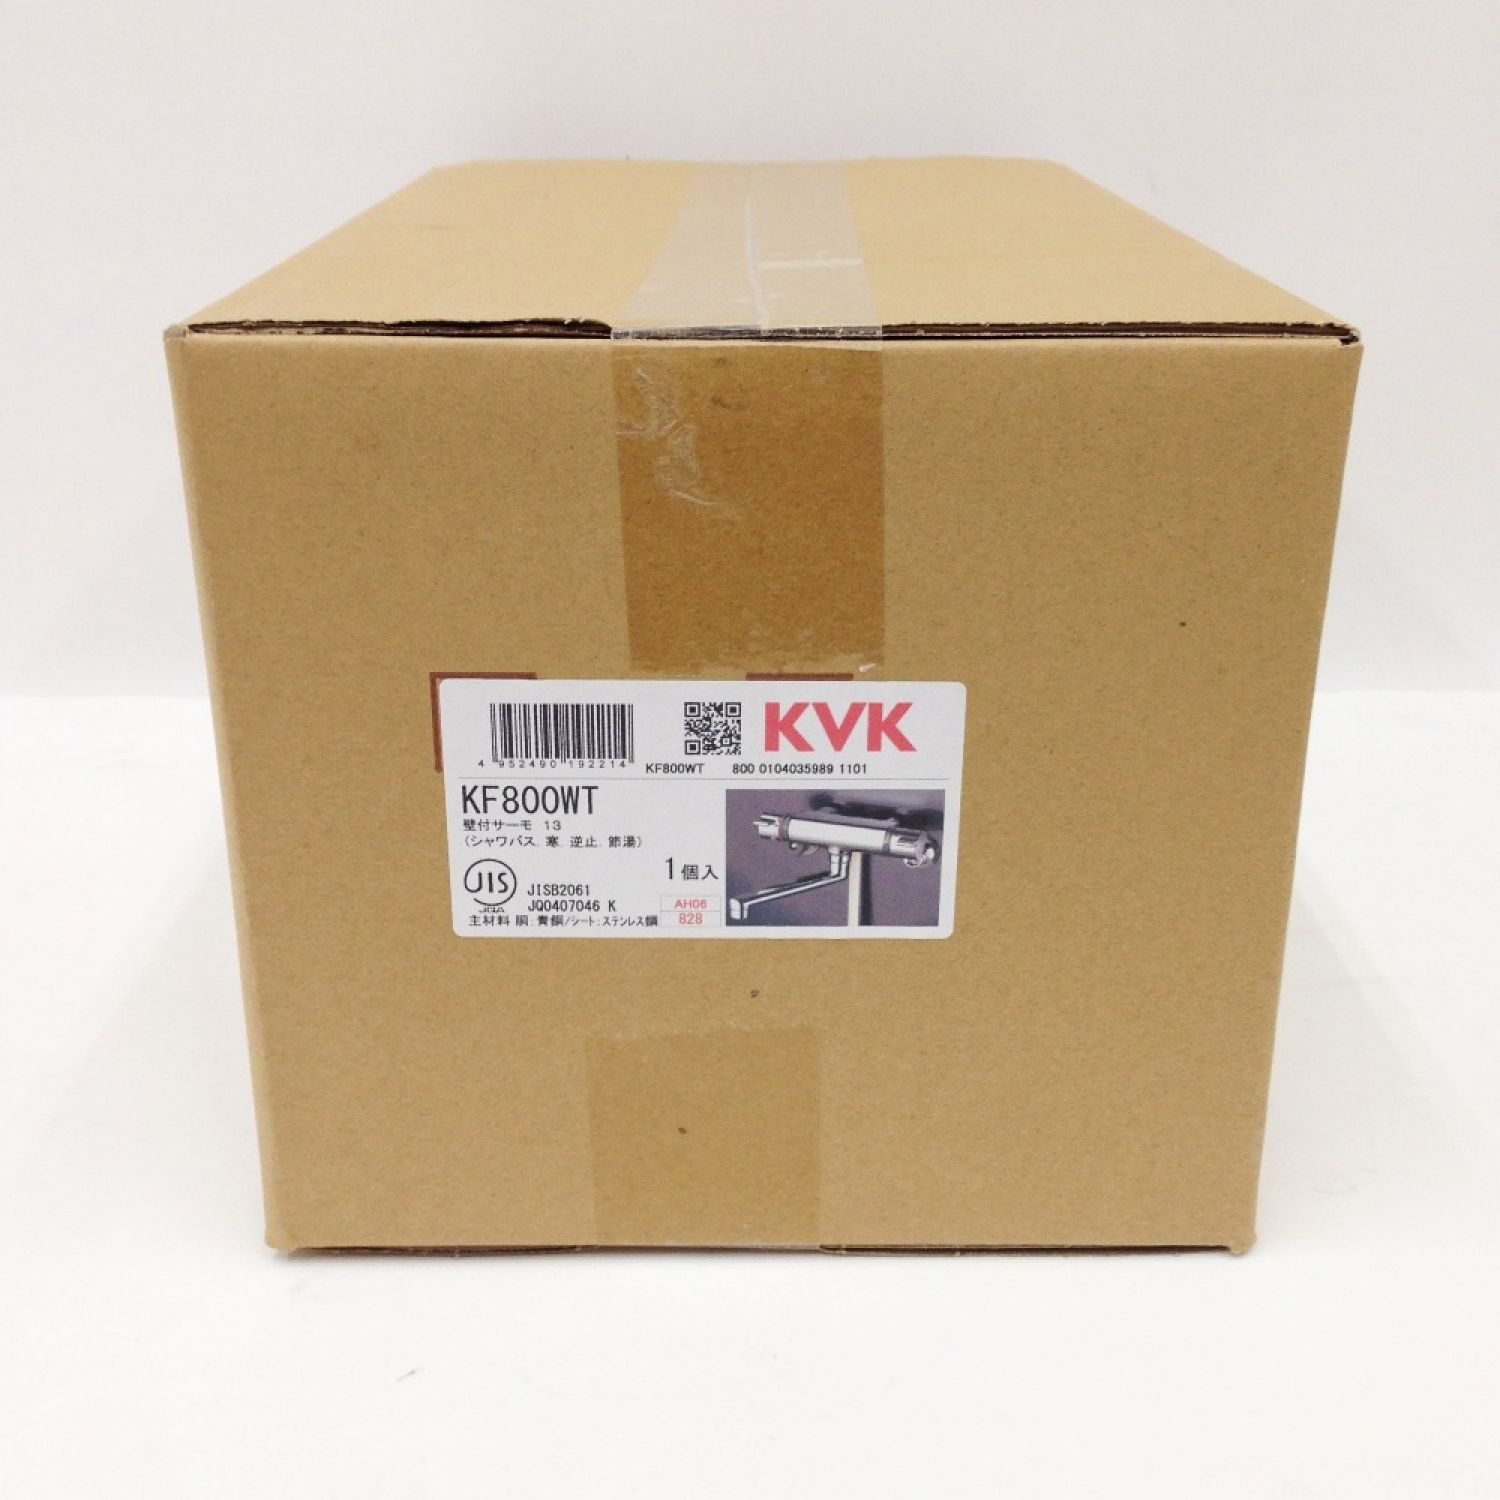 KVK サーモスタット式シャワー混合水栓 寒冷地用 KF800WT 未開封品 Nランク